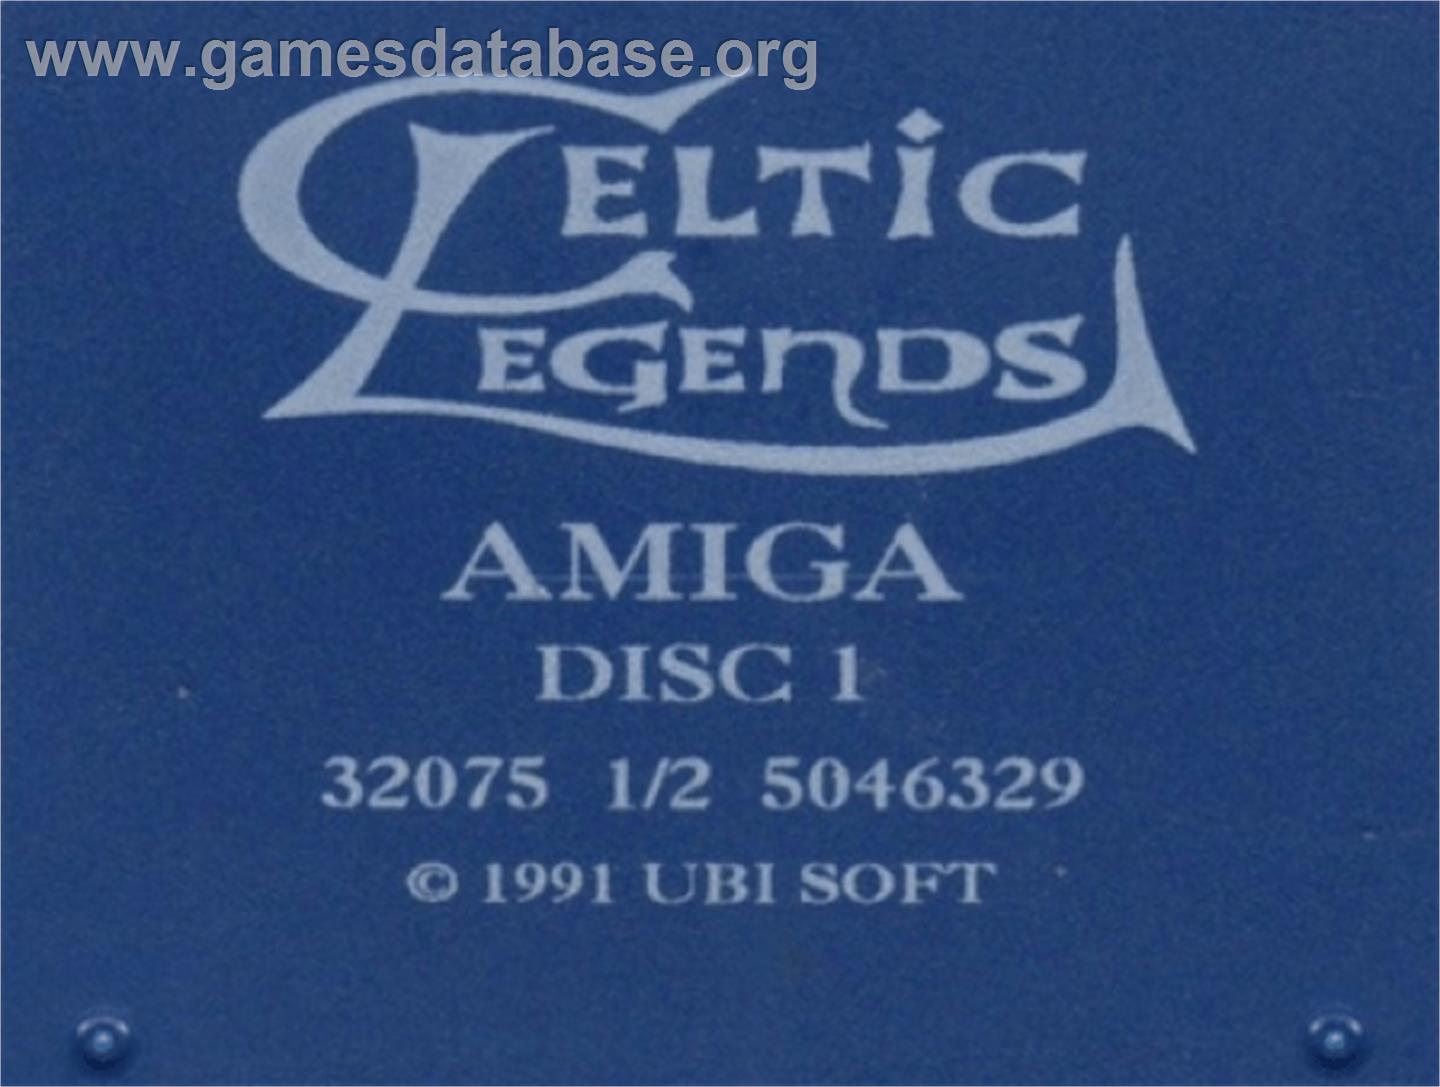 Celtic Legends - Commodore Amiga - Artwork - Cartridge Top